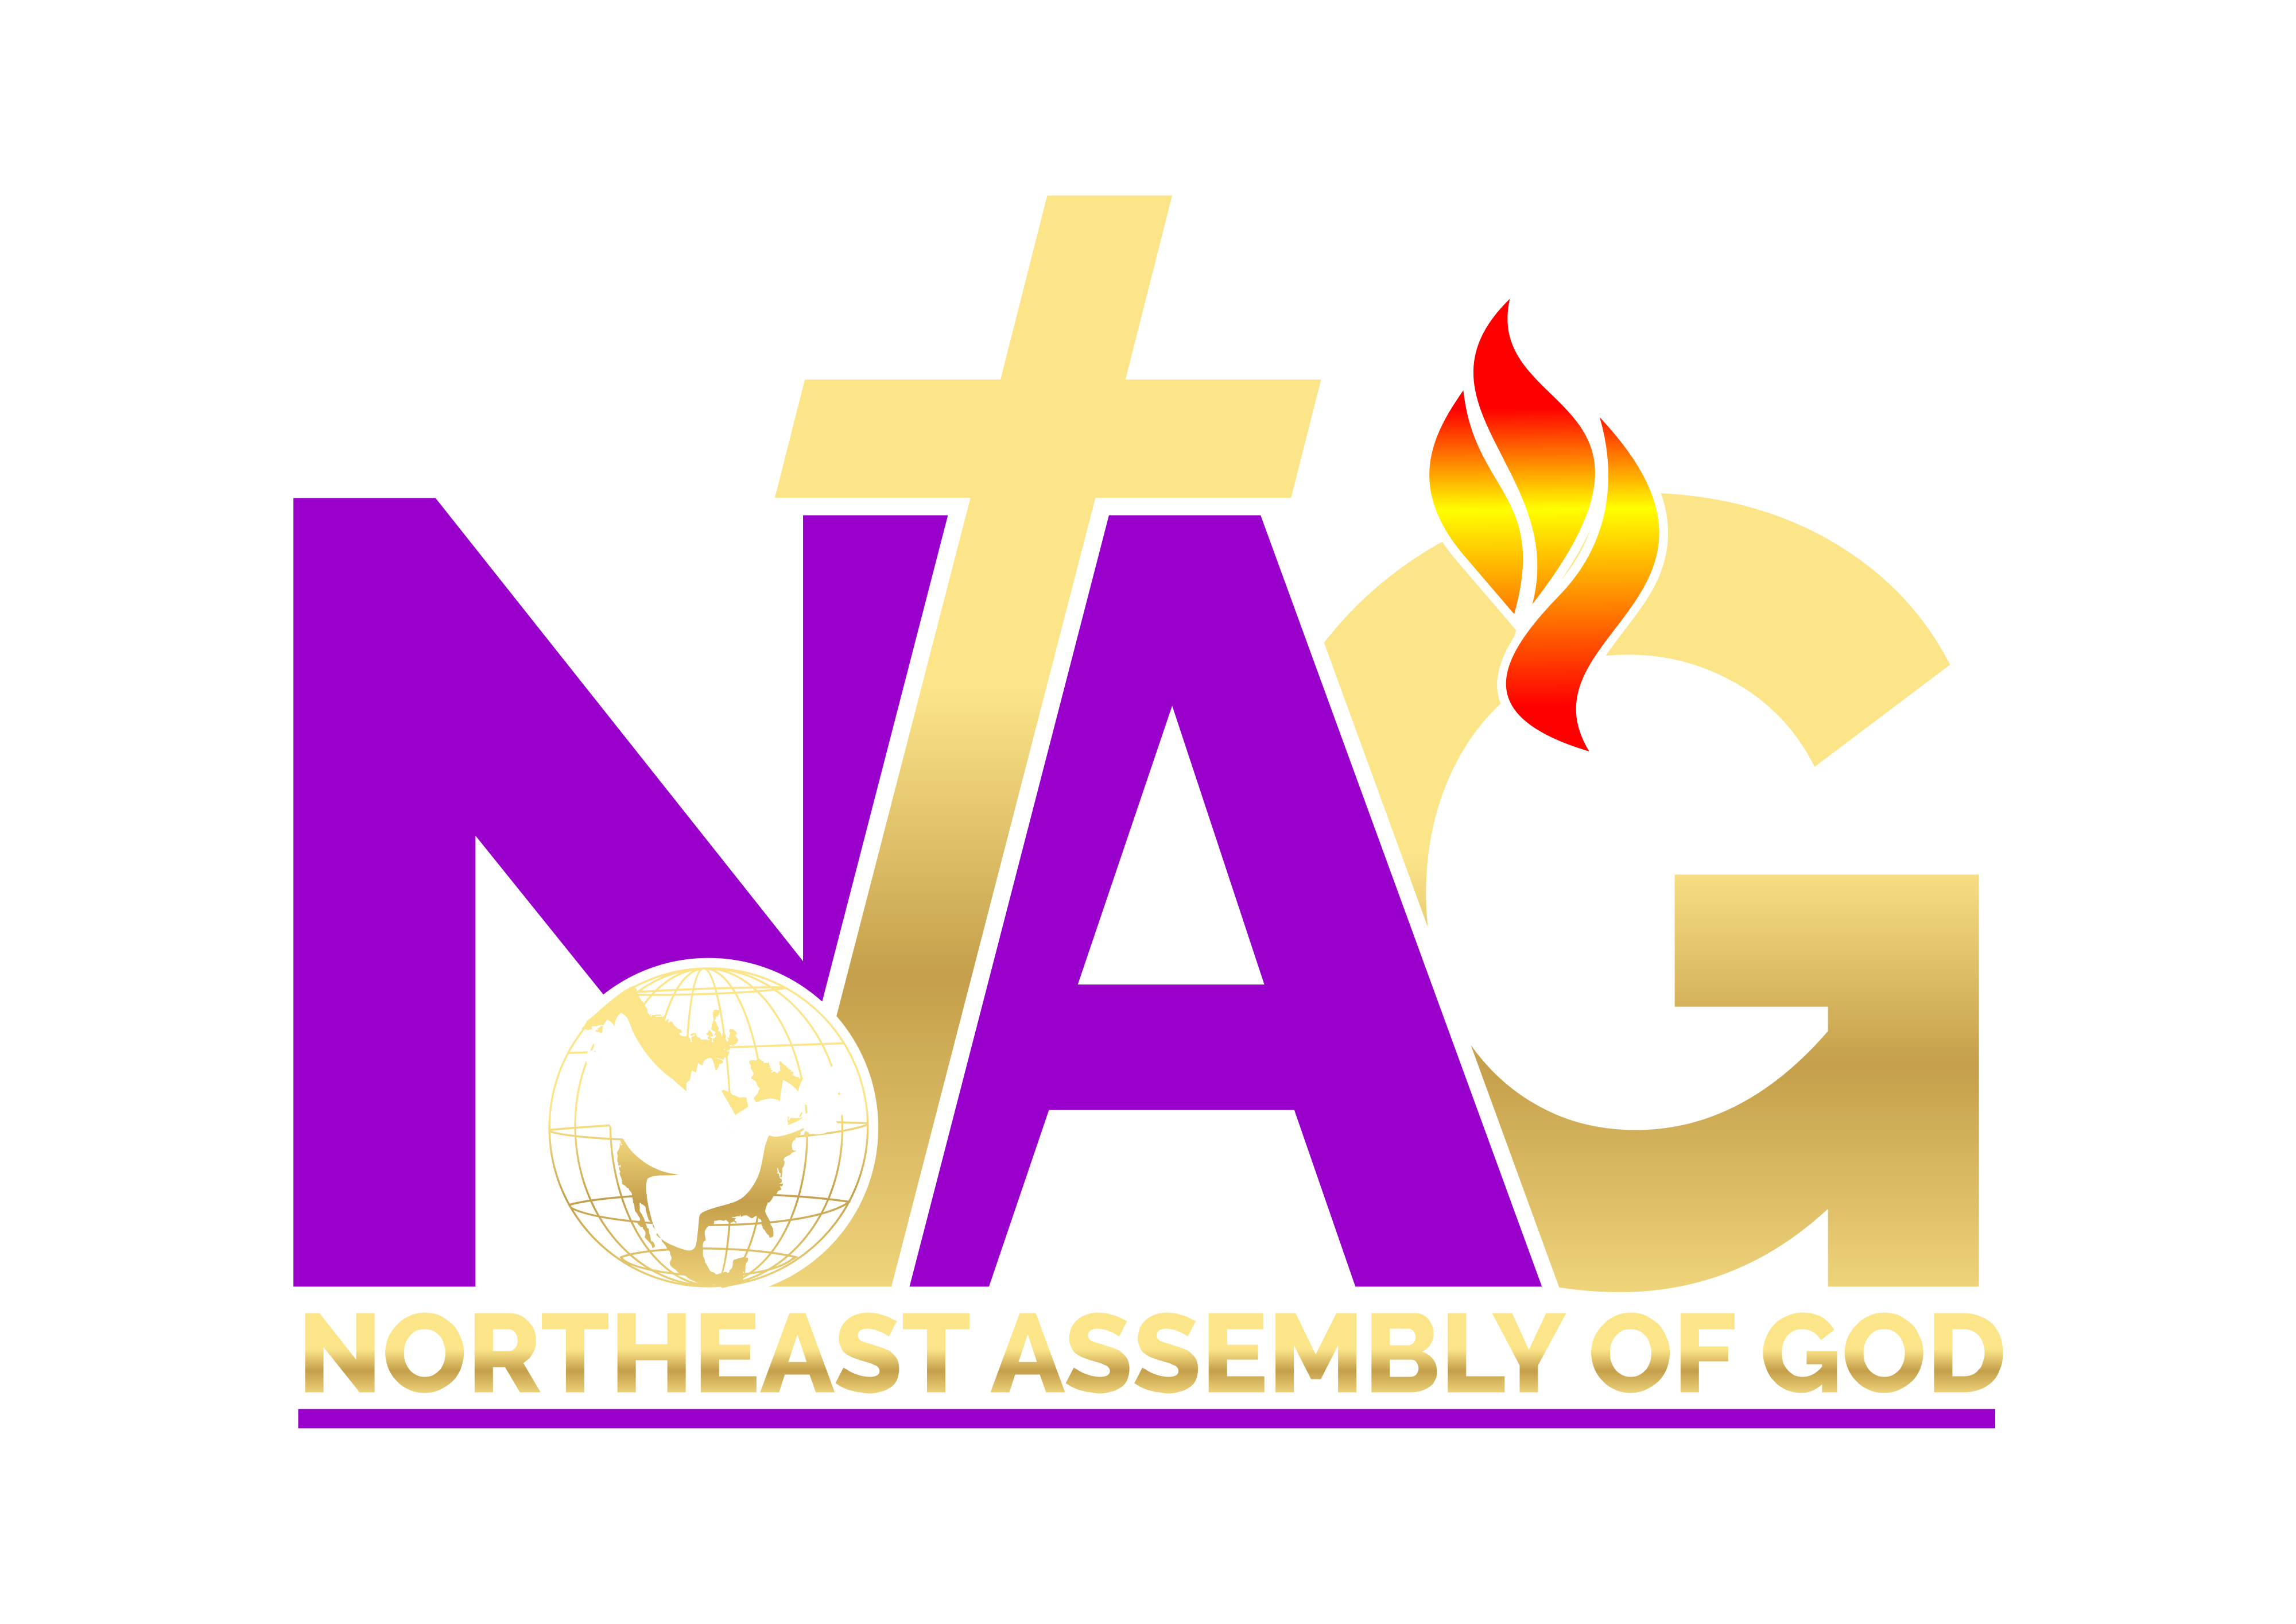 Faith & Hope – The New Northeast Assembly of God